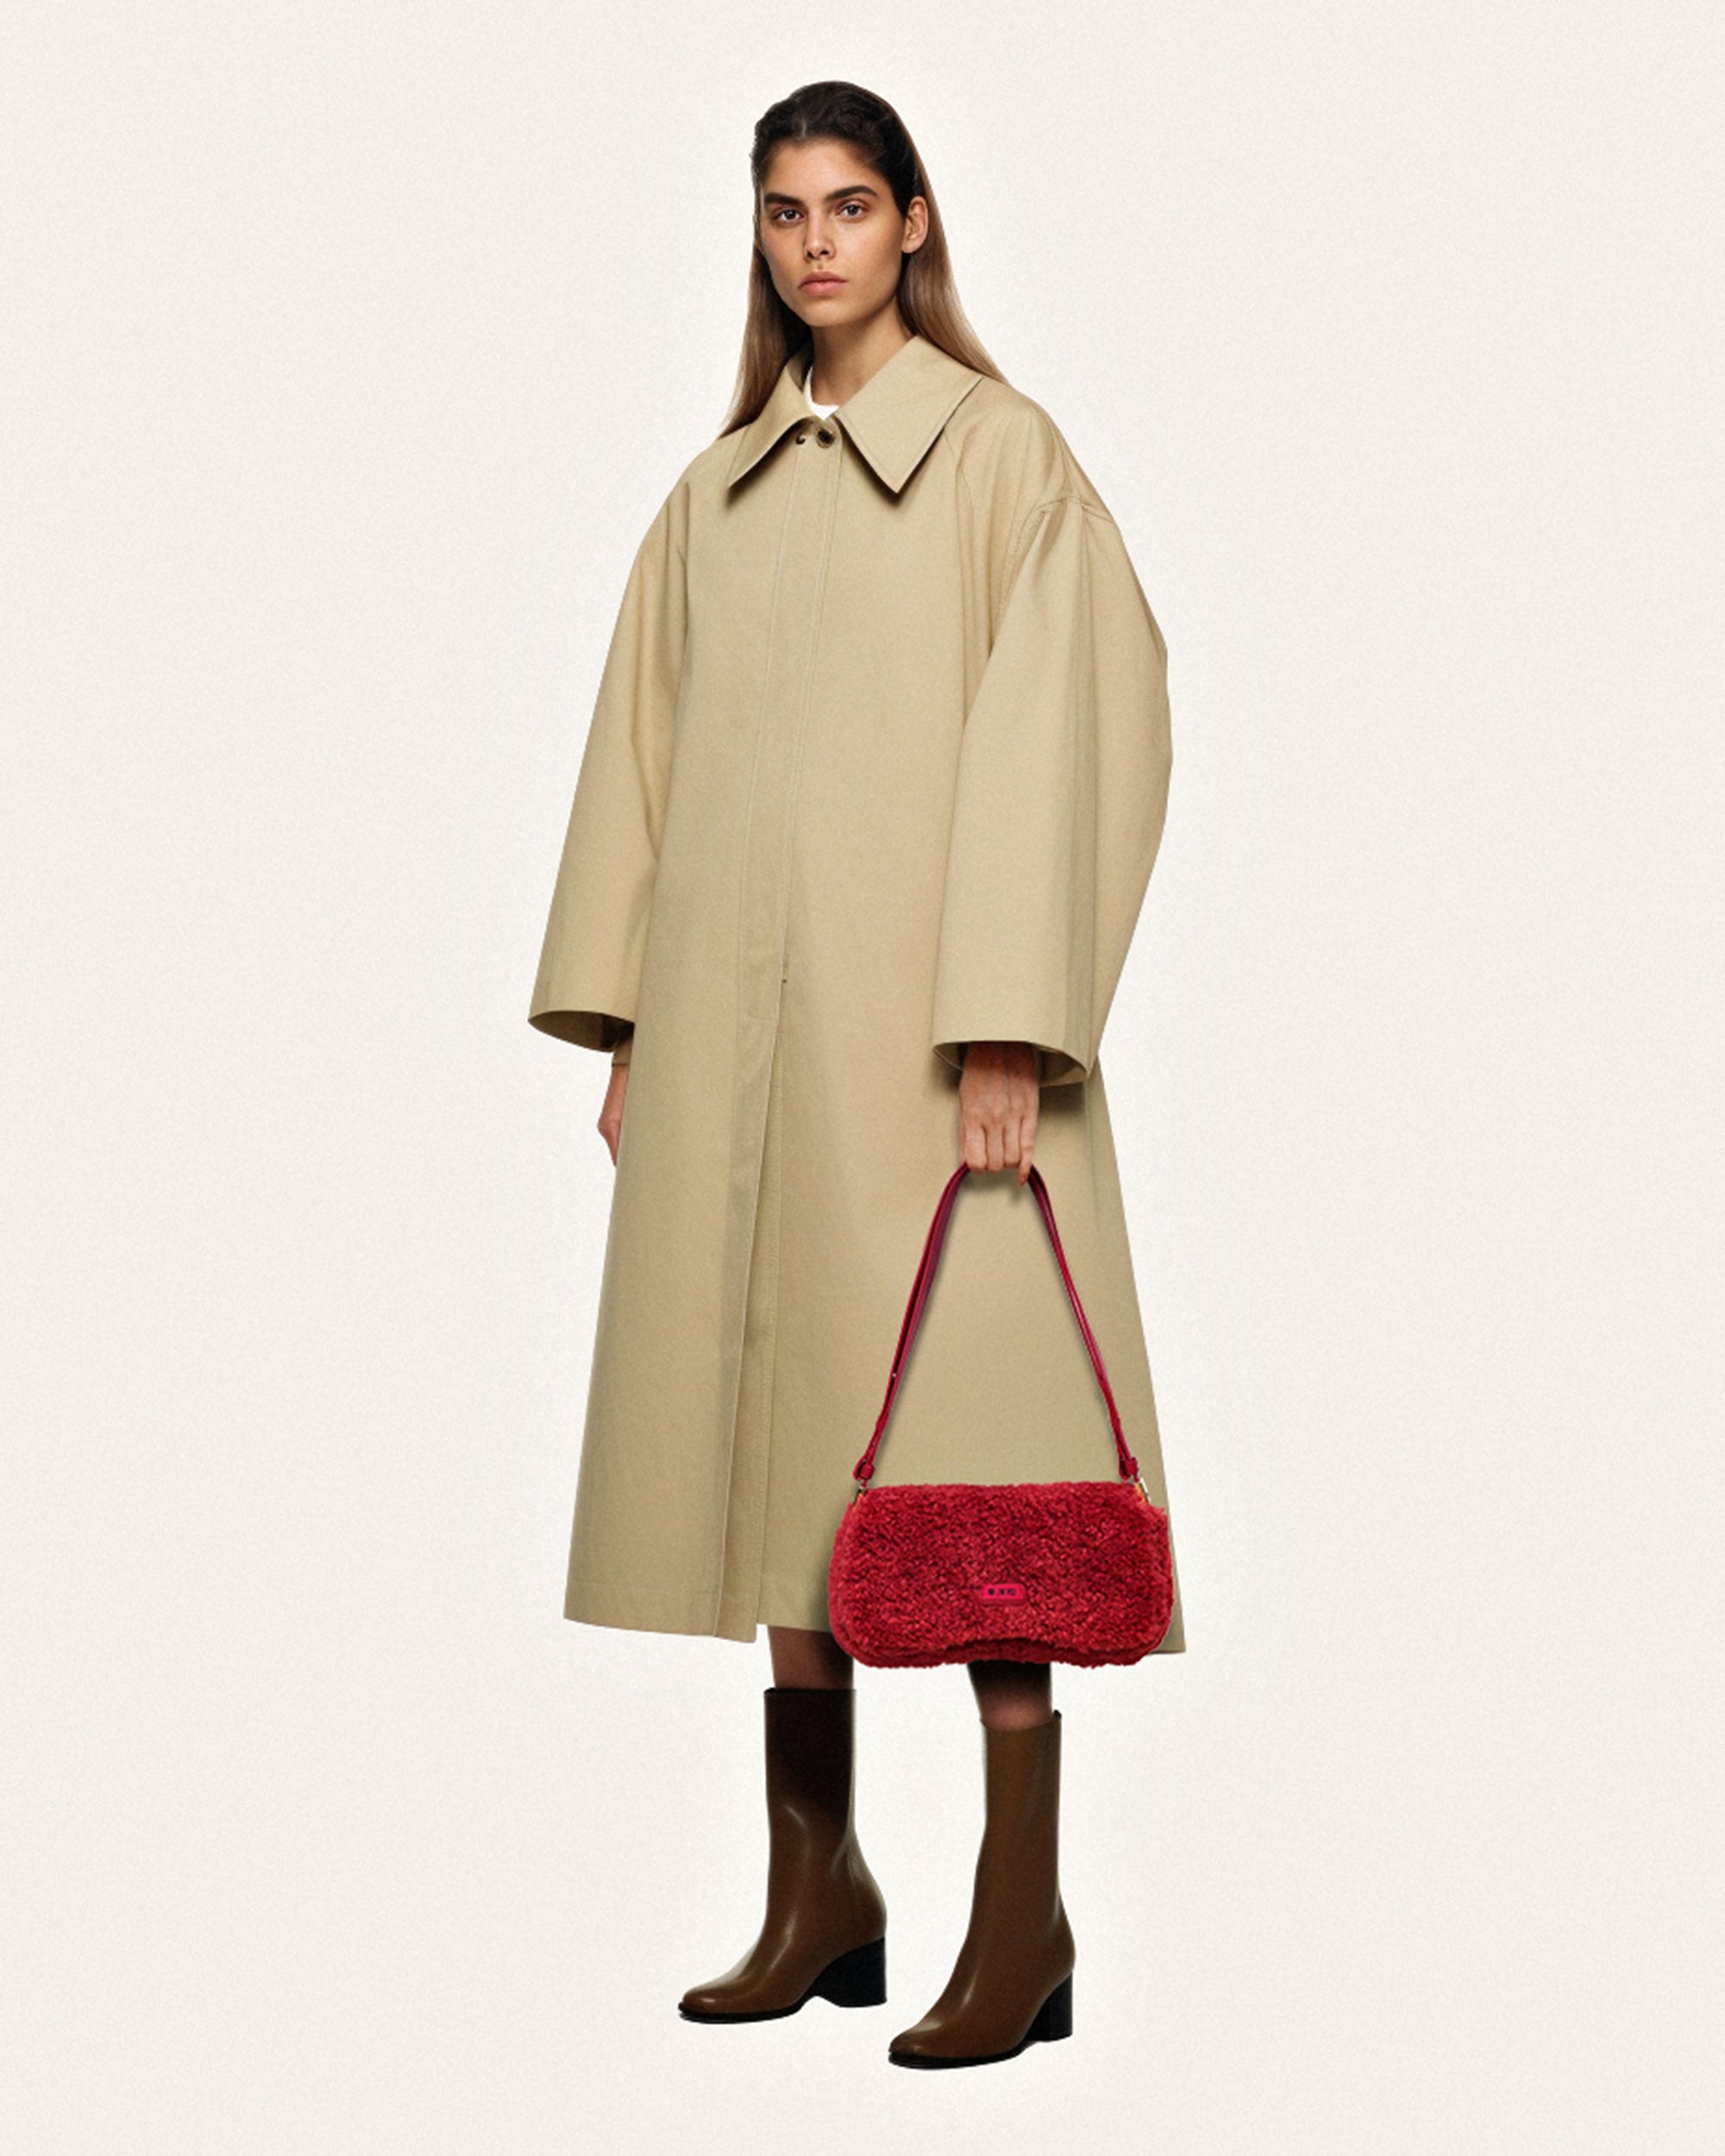 JW PEI Solid Color Pudding Bag JOY Niche Design New Style Bag Fashion  Adjustable Crossbody Bag